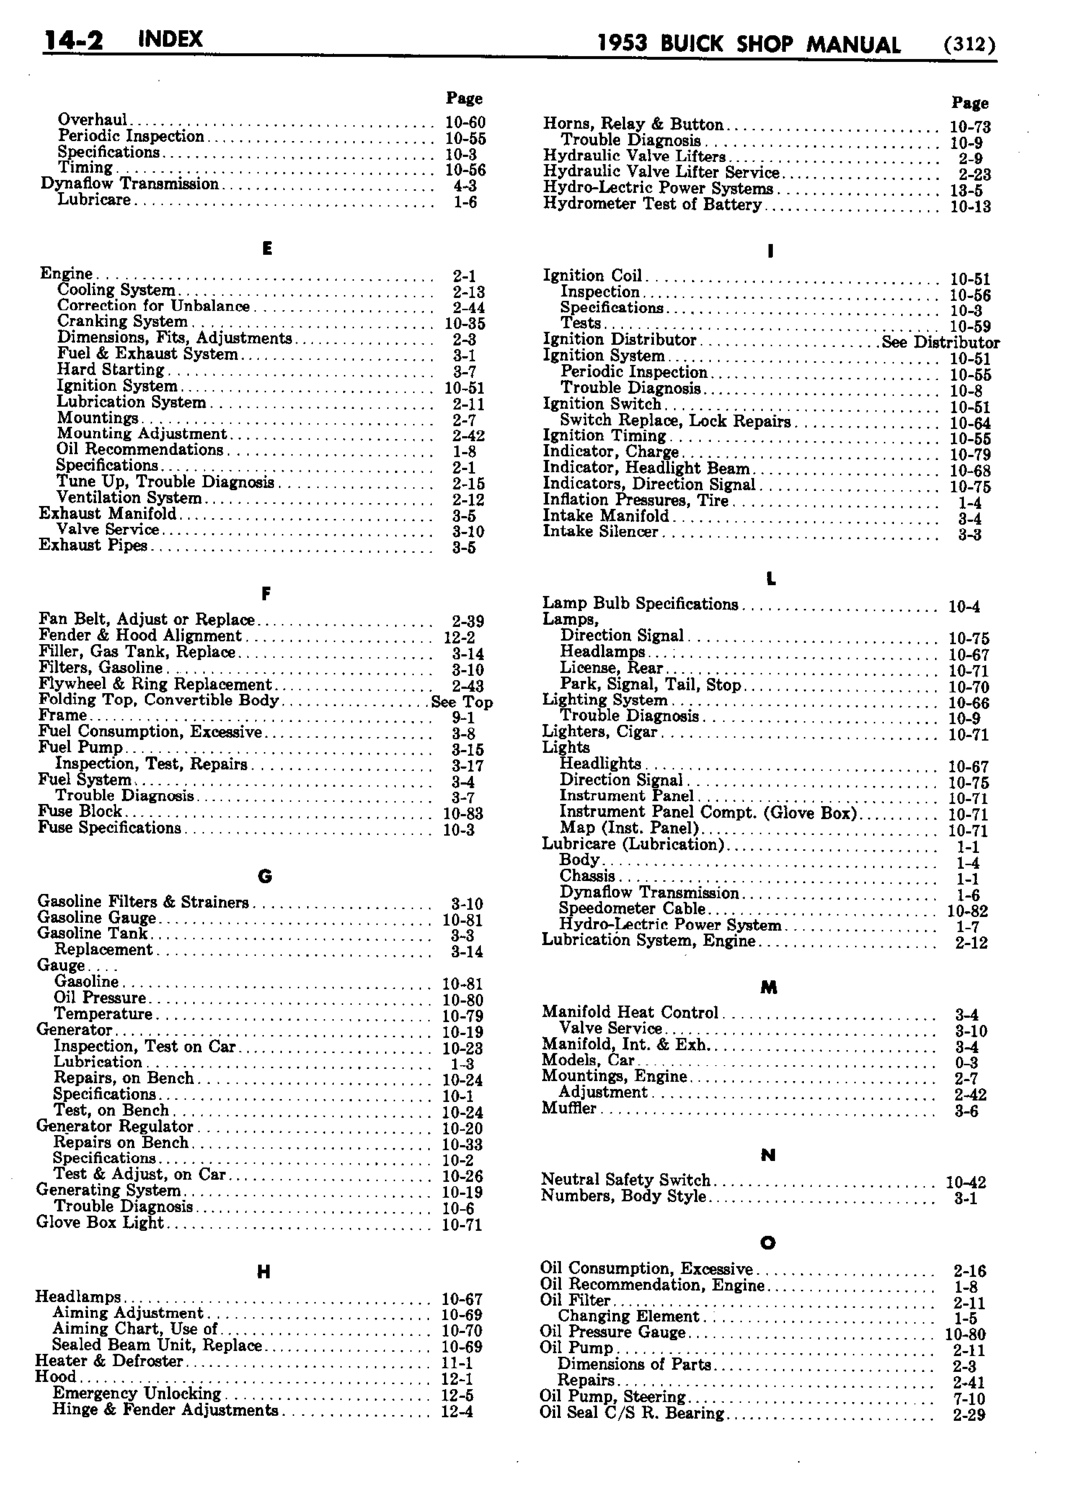 n_15 1953 Buick Shop Manual - Index-002-002.jpg